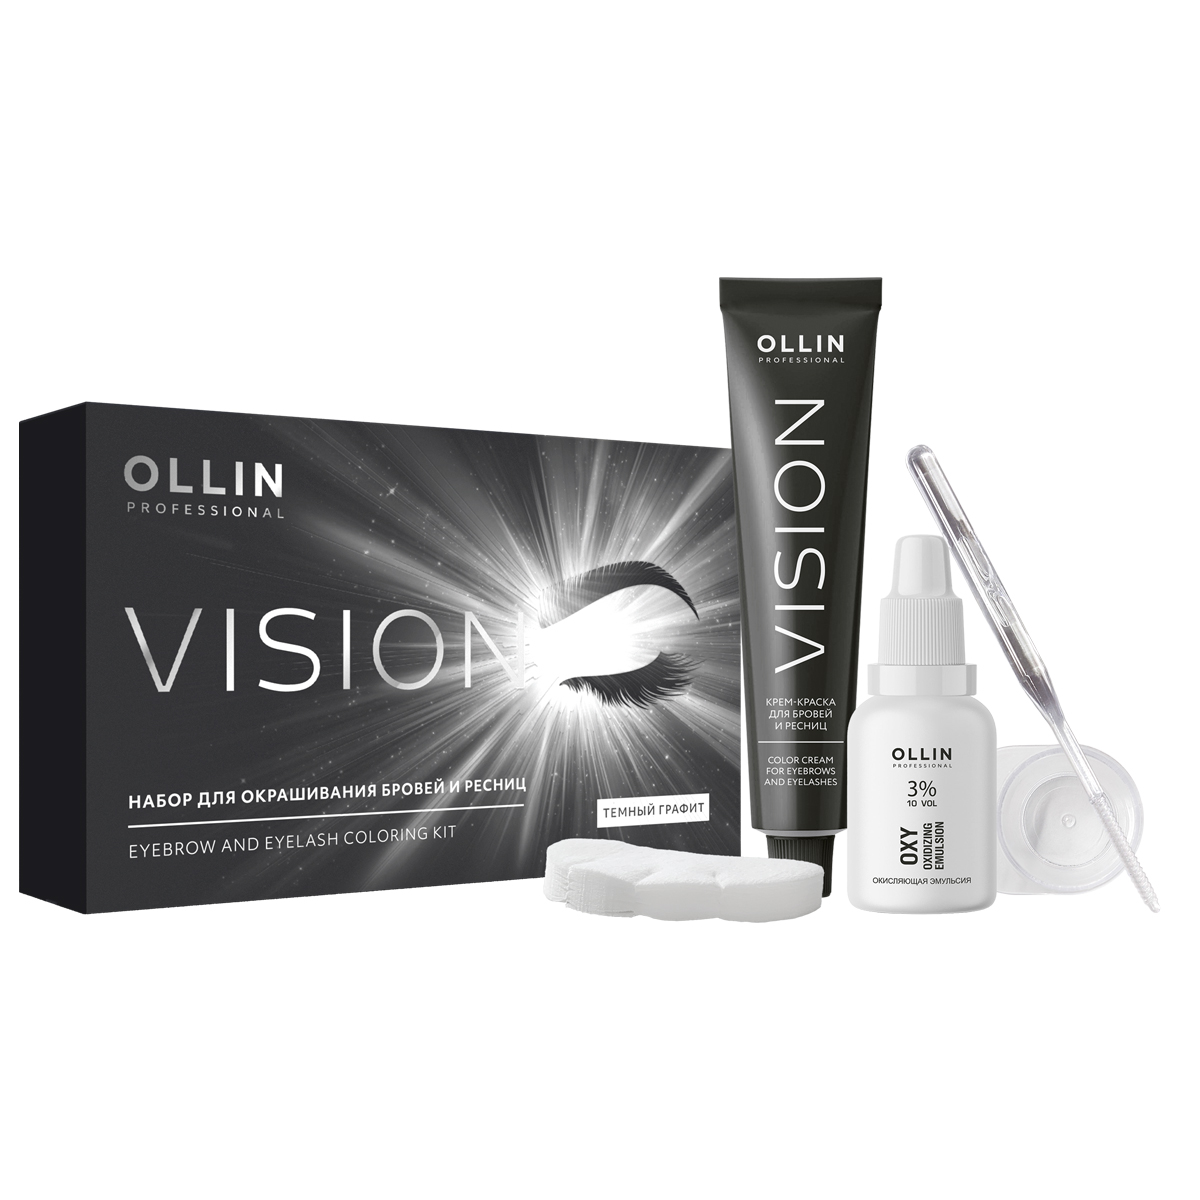 Ollin Professional Набор для окрашивания бровей и ресниц (Ollin Professional, Vision)